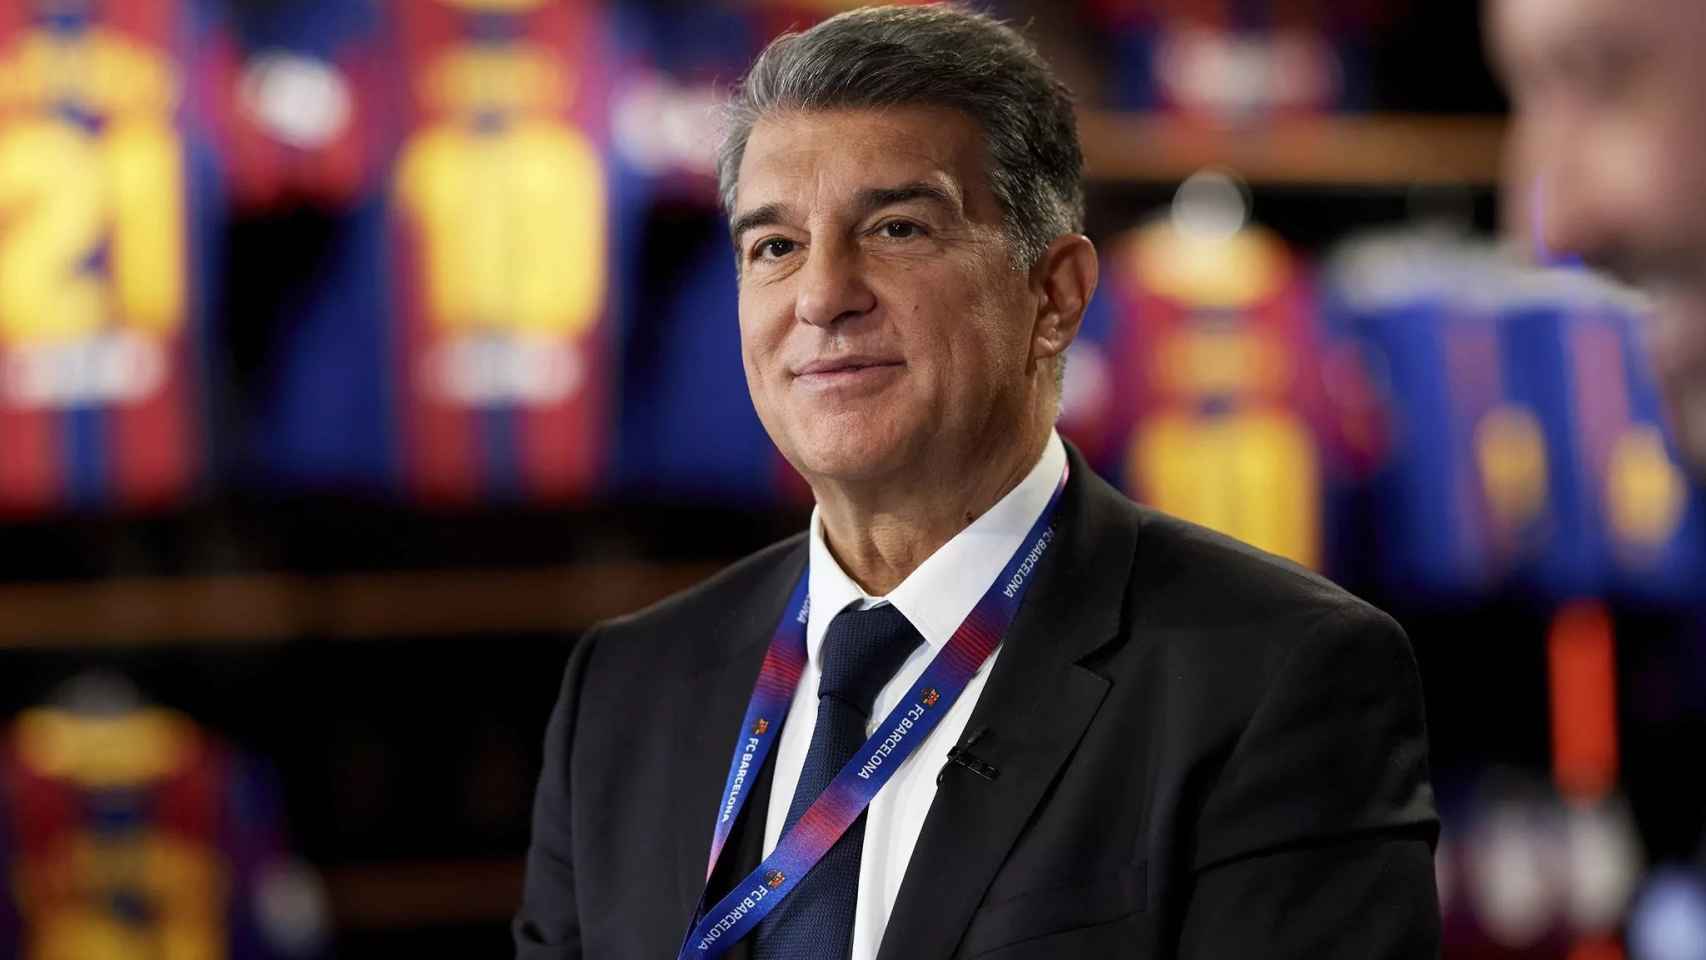 Joan Laporta, nuevo presidente del Barça | FCB